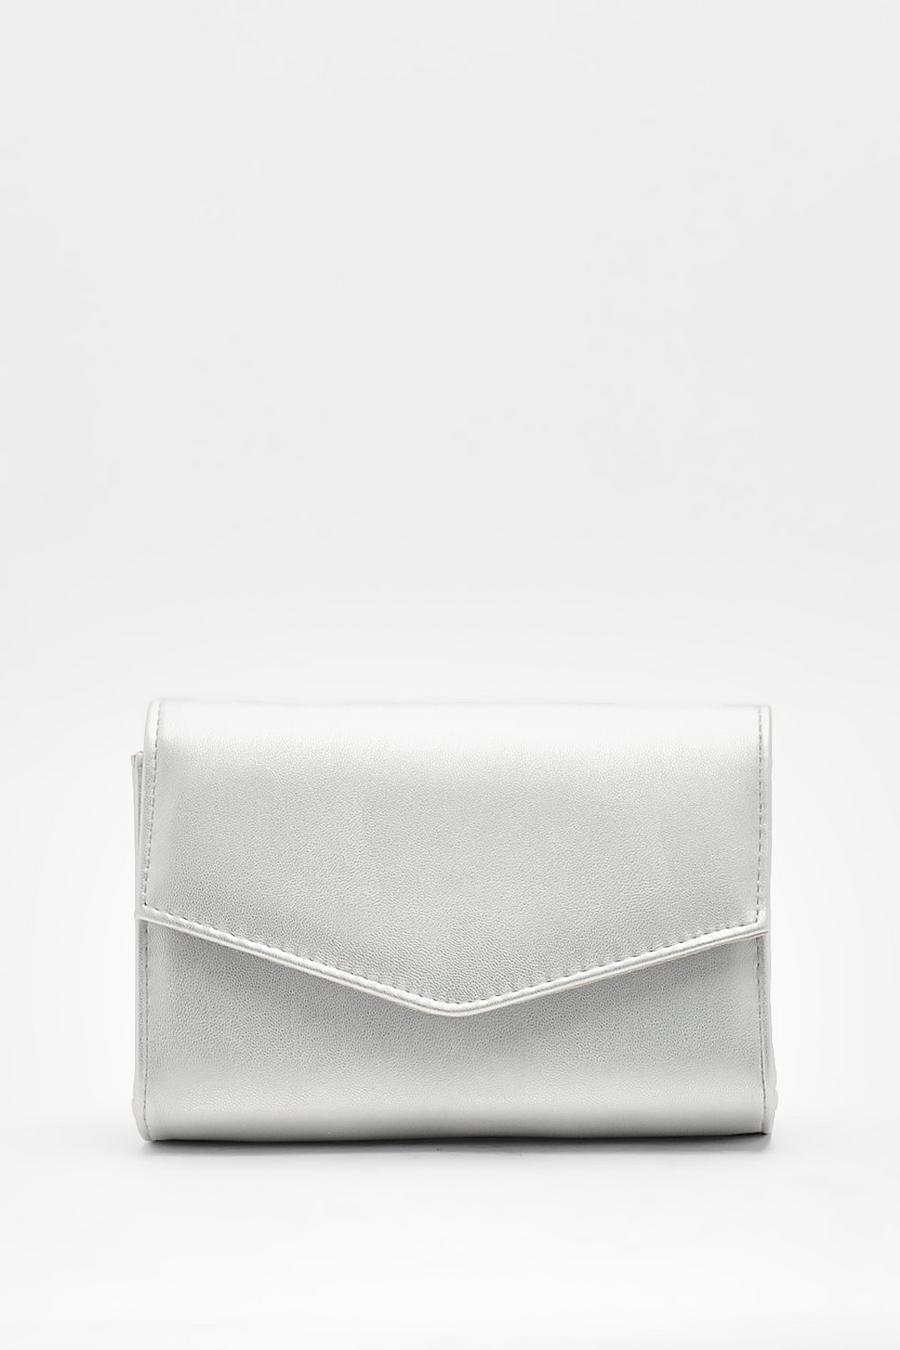 Silver Envelope Chain Clutch Bag 